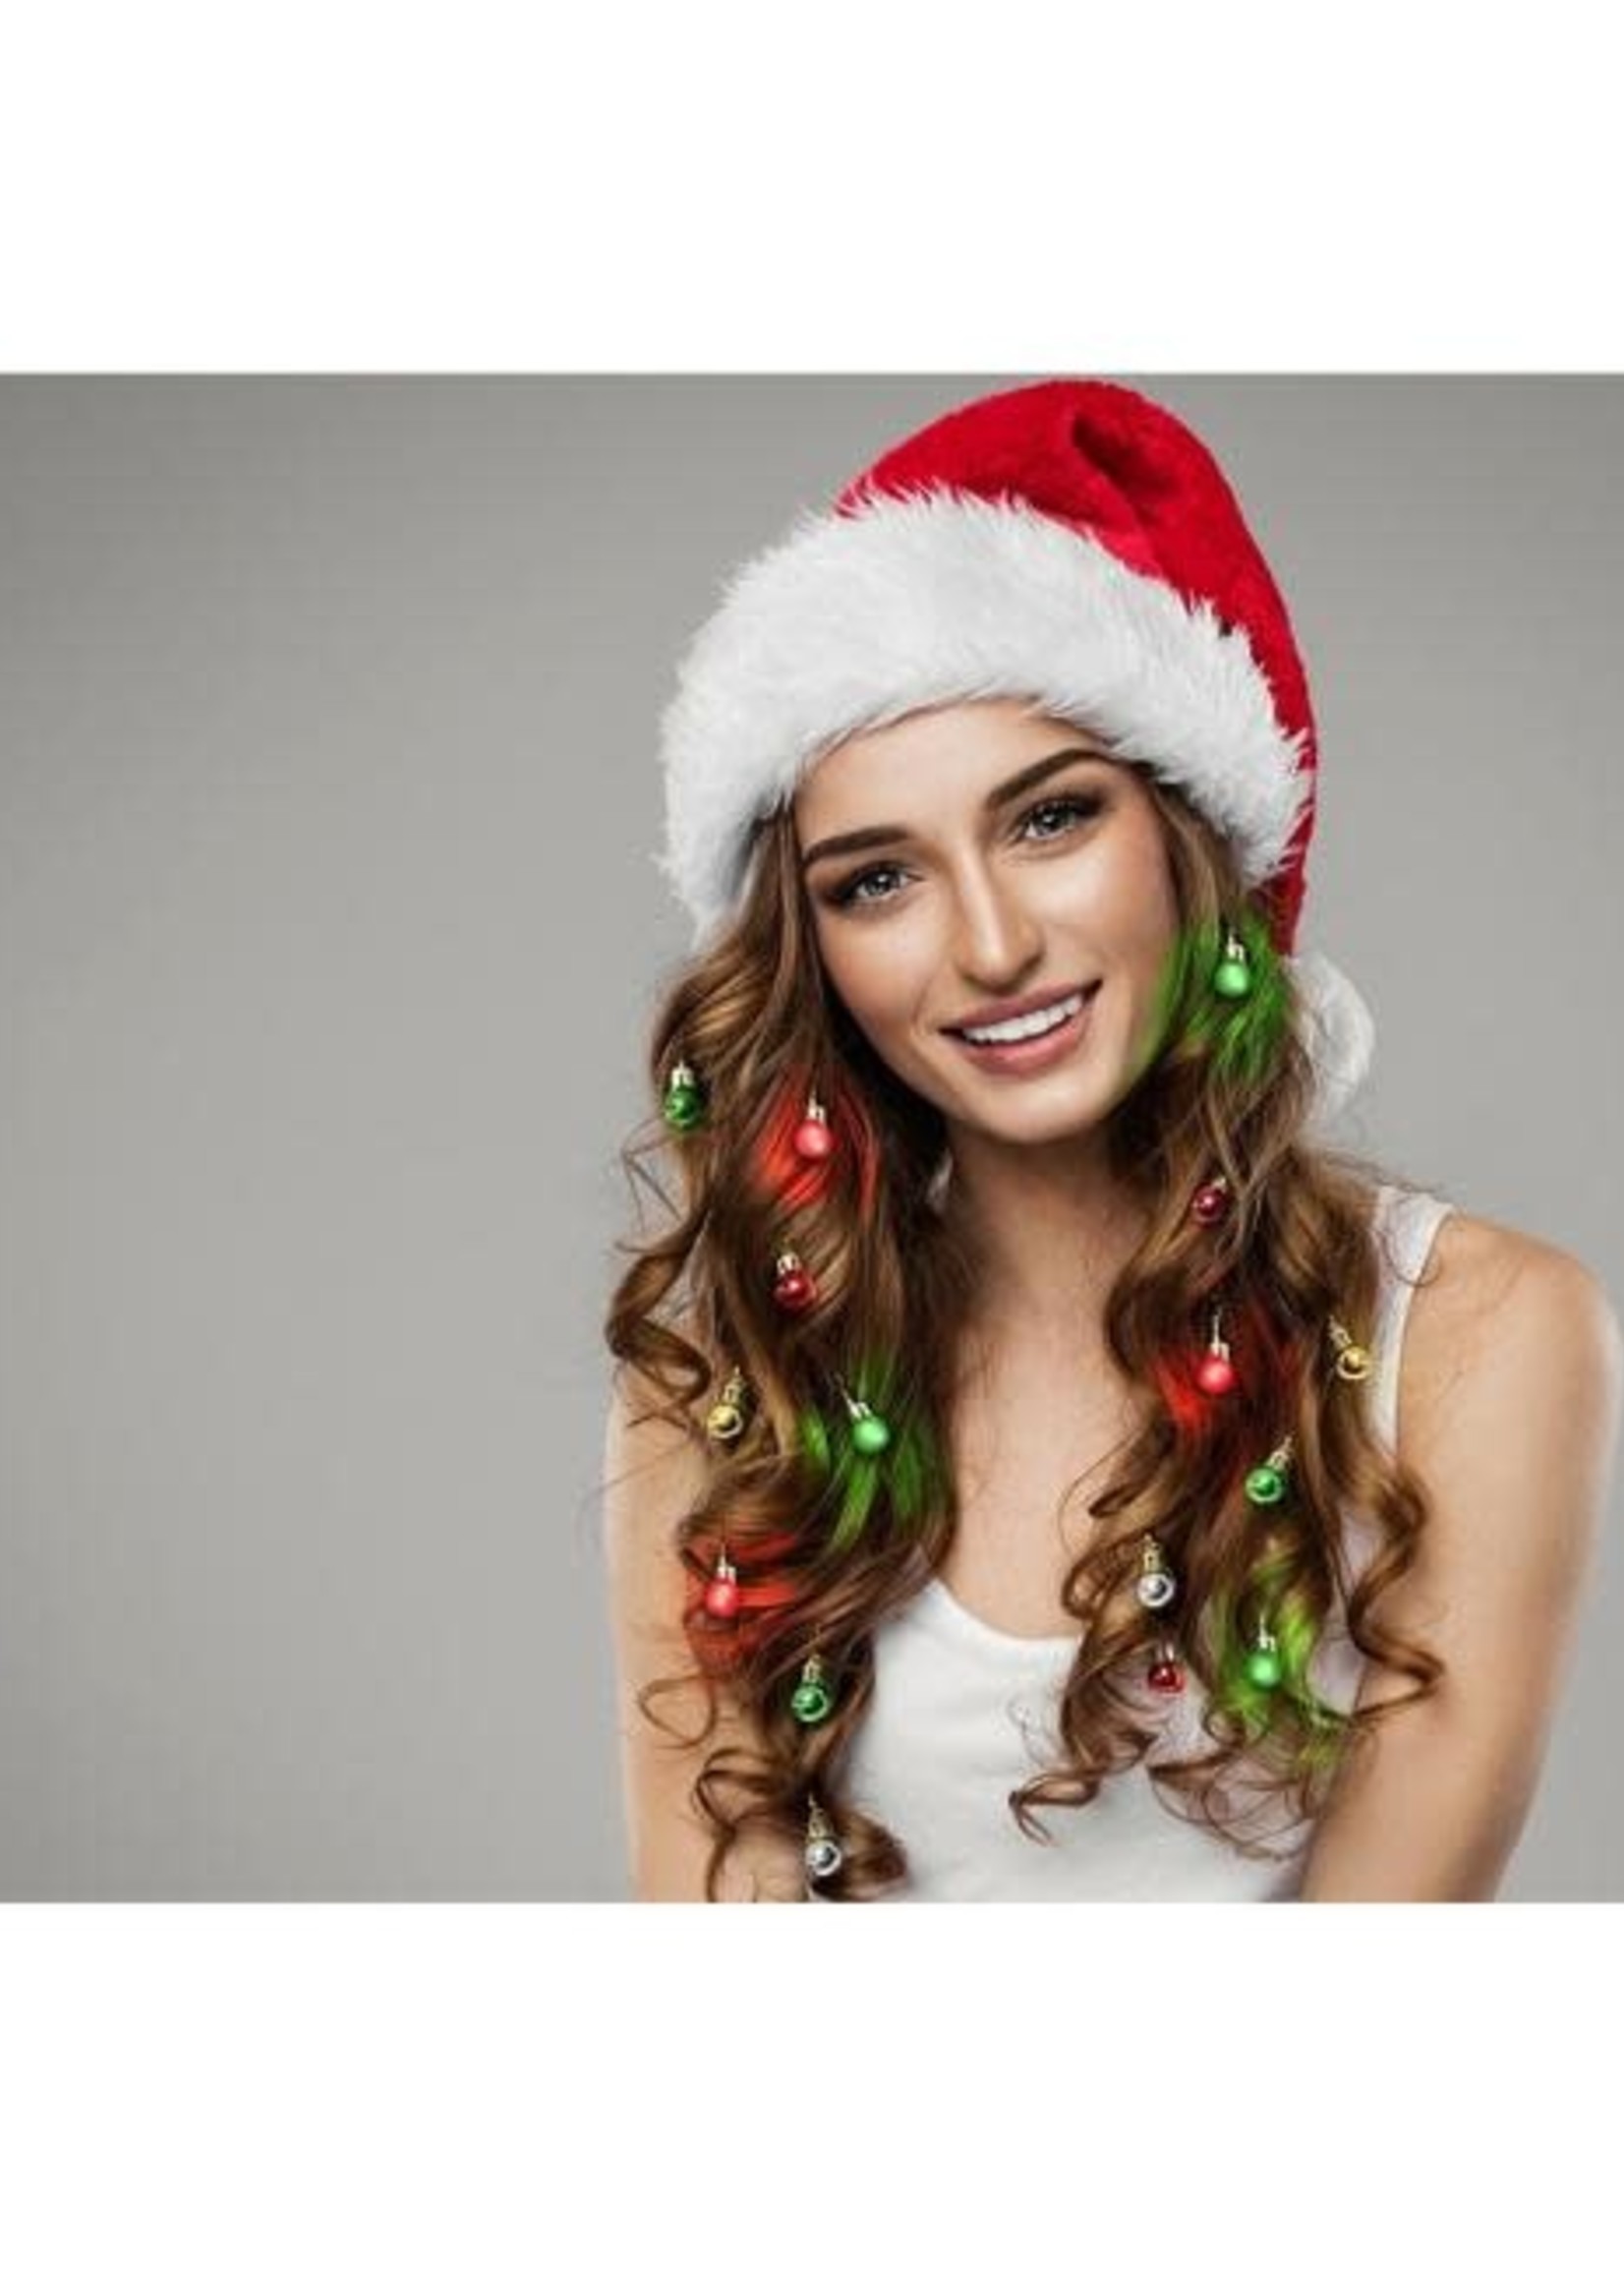 Beardaments Women's Light-Up Hair Christmas Ornaments - Lights for Your Hair!